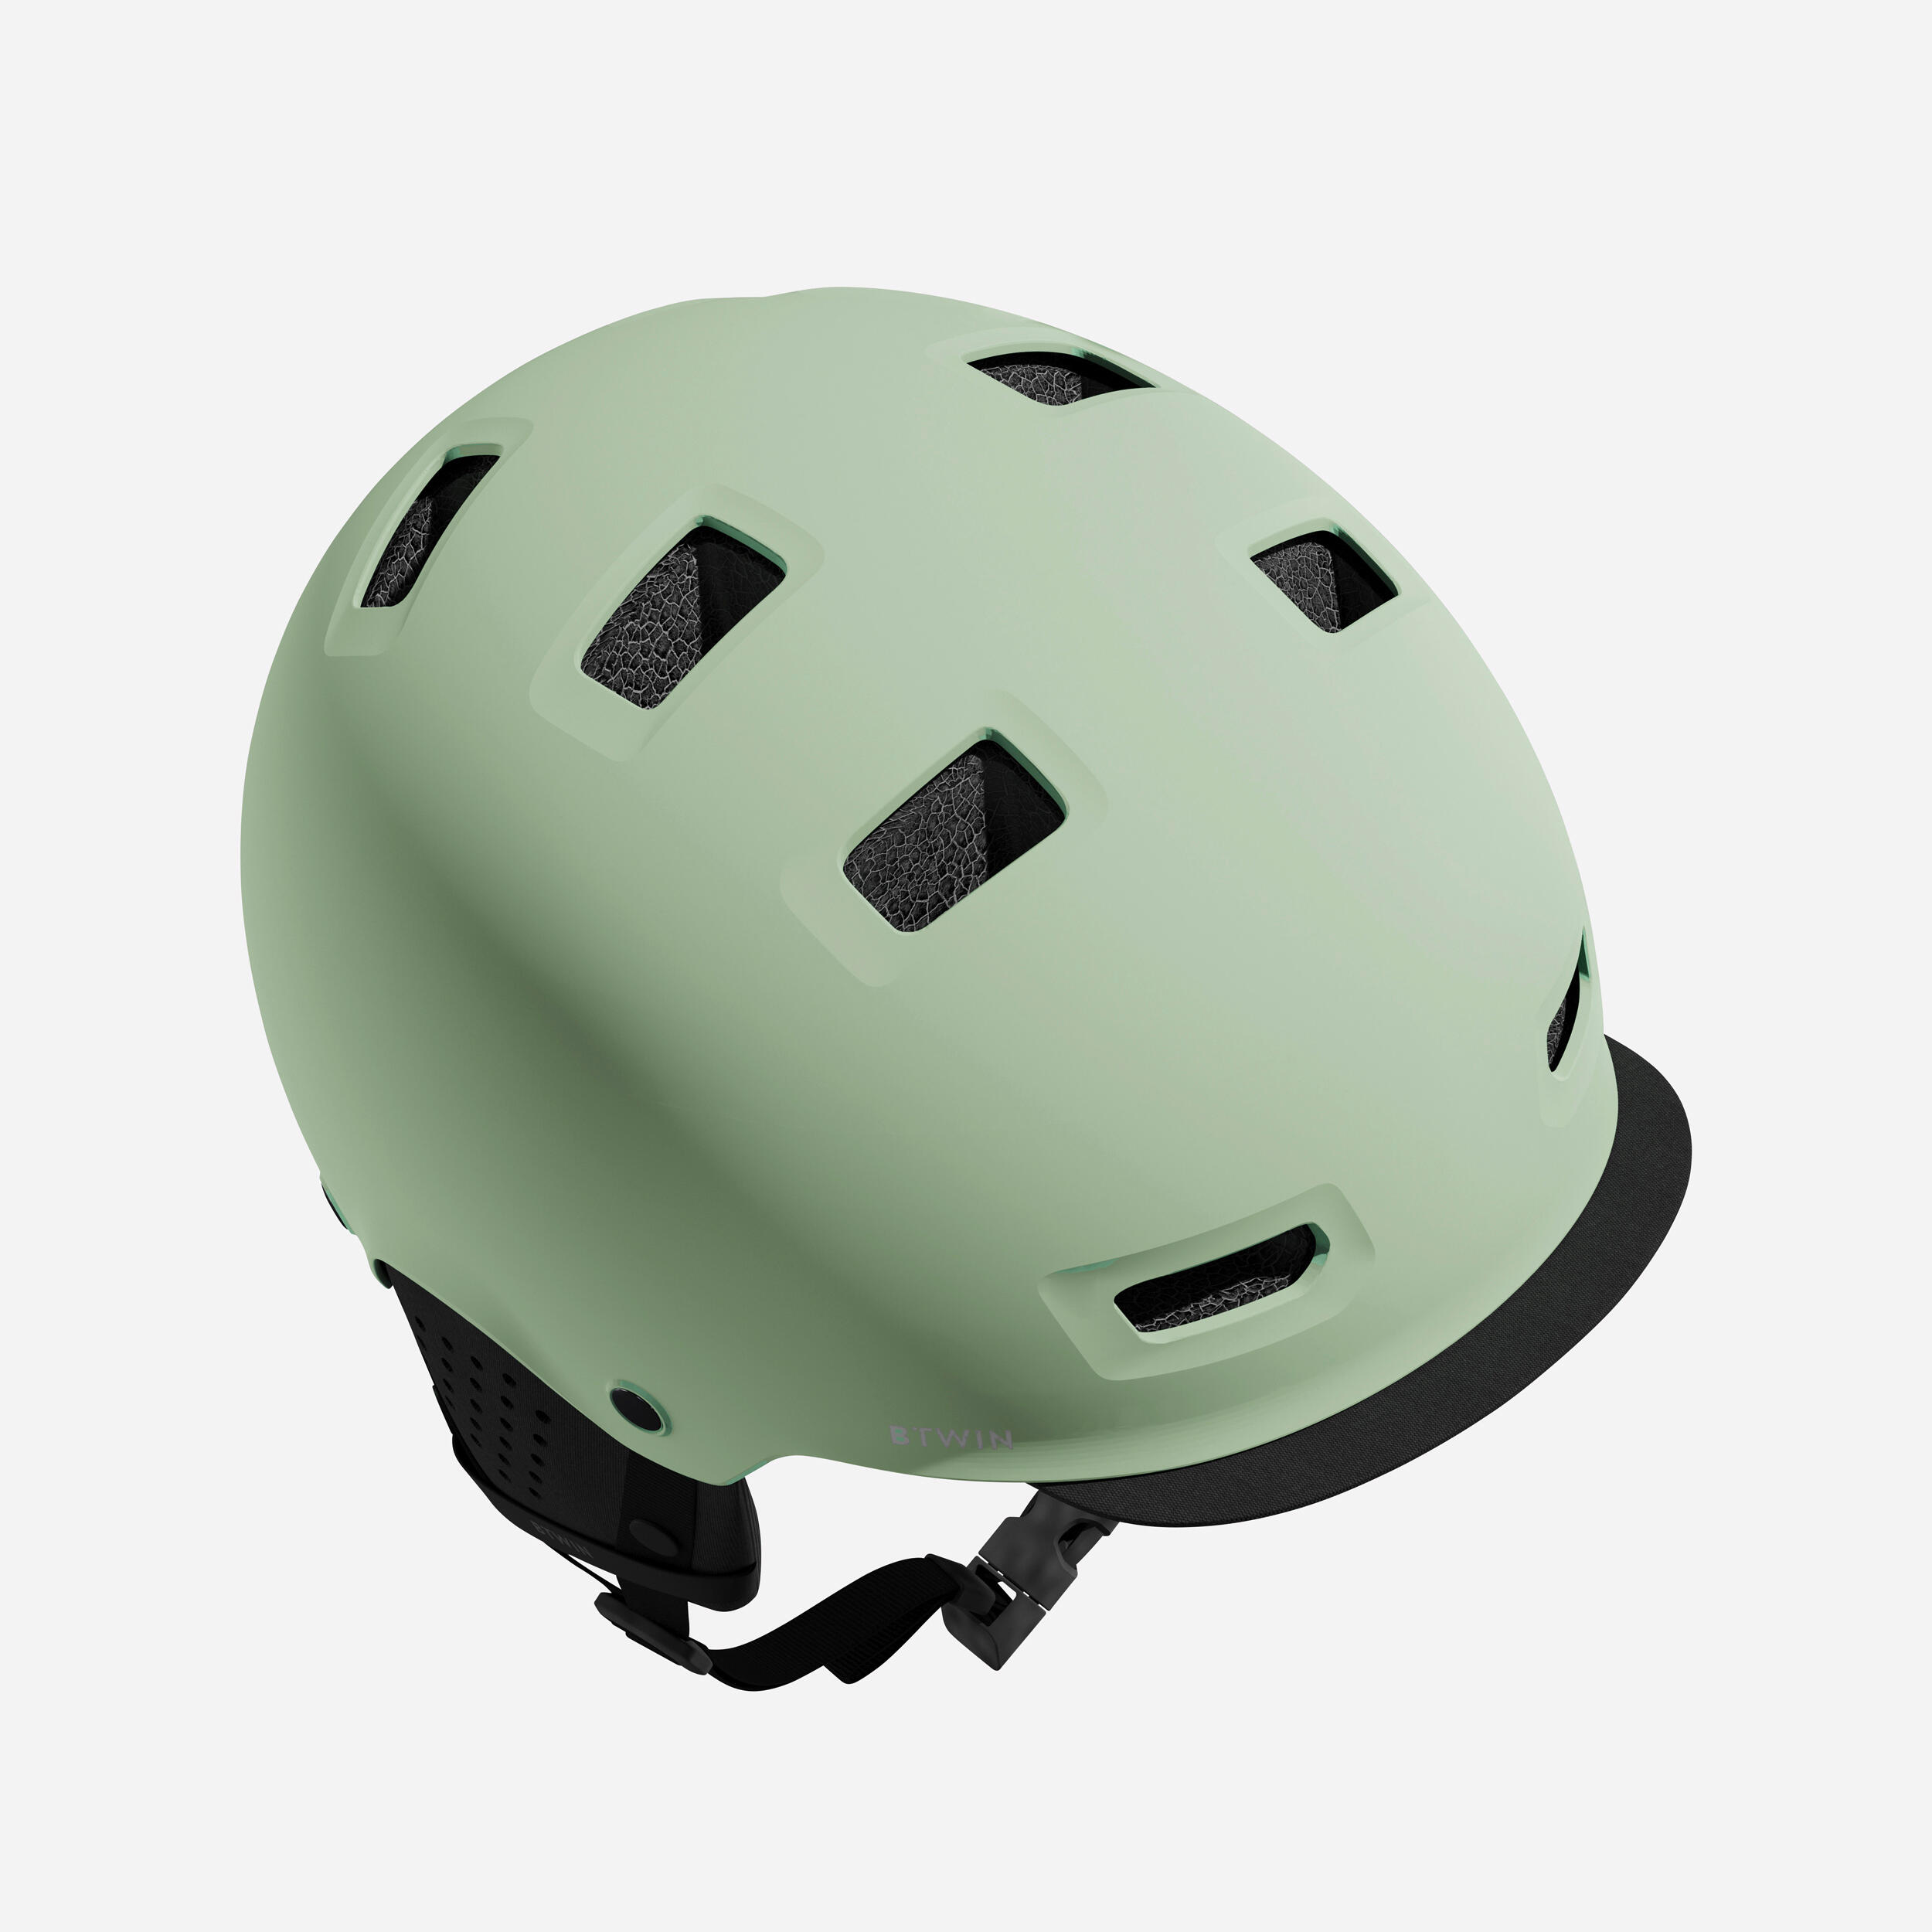 City Cycling Bowl Helmet 500 - Rosemary Green 1/12